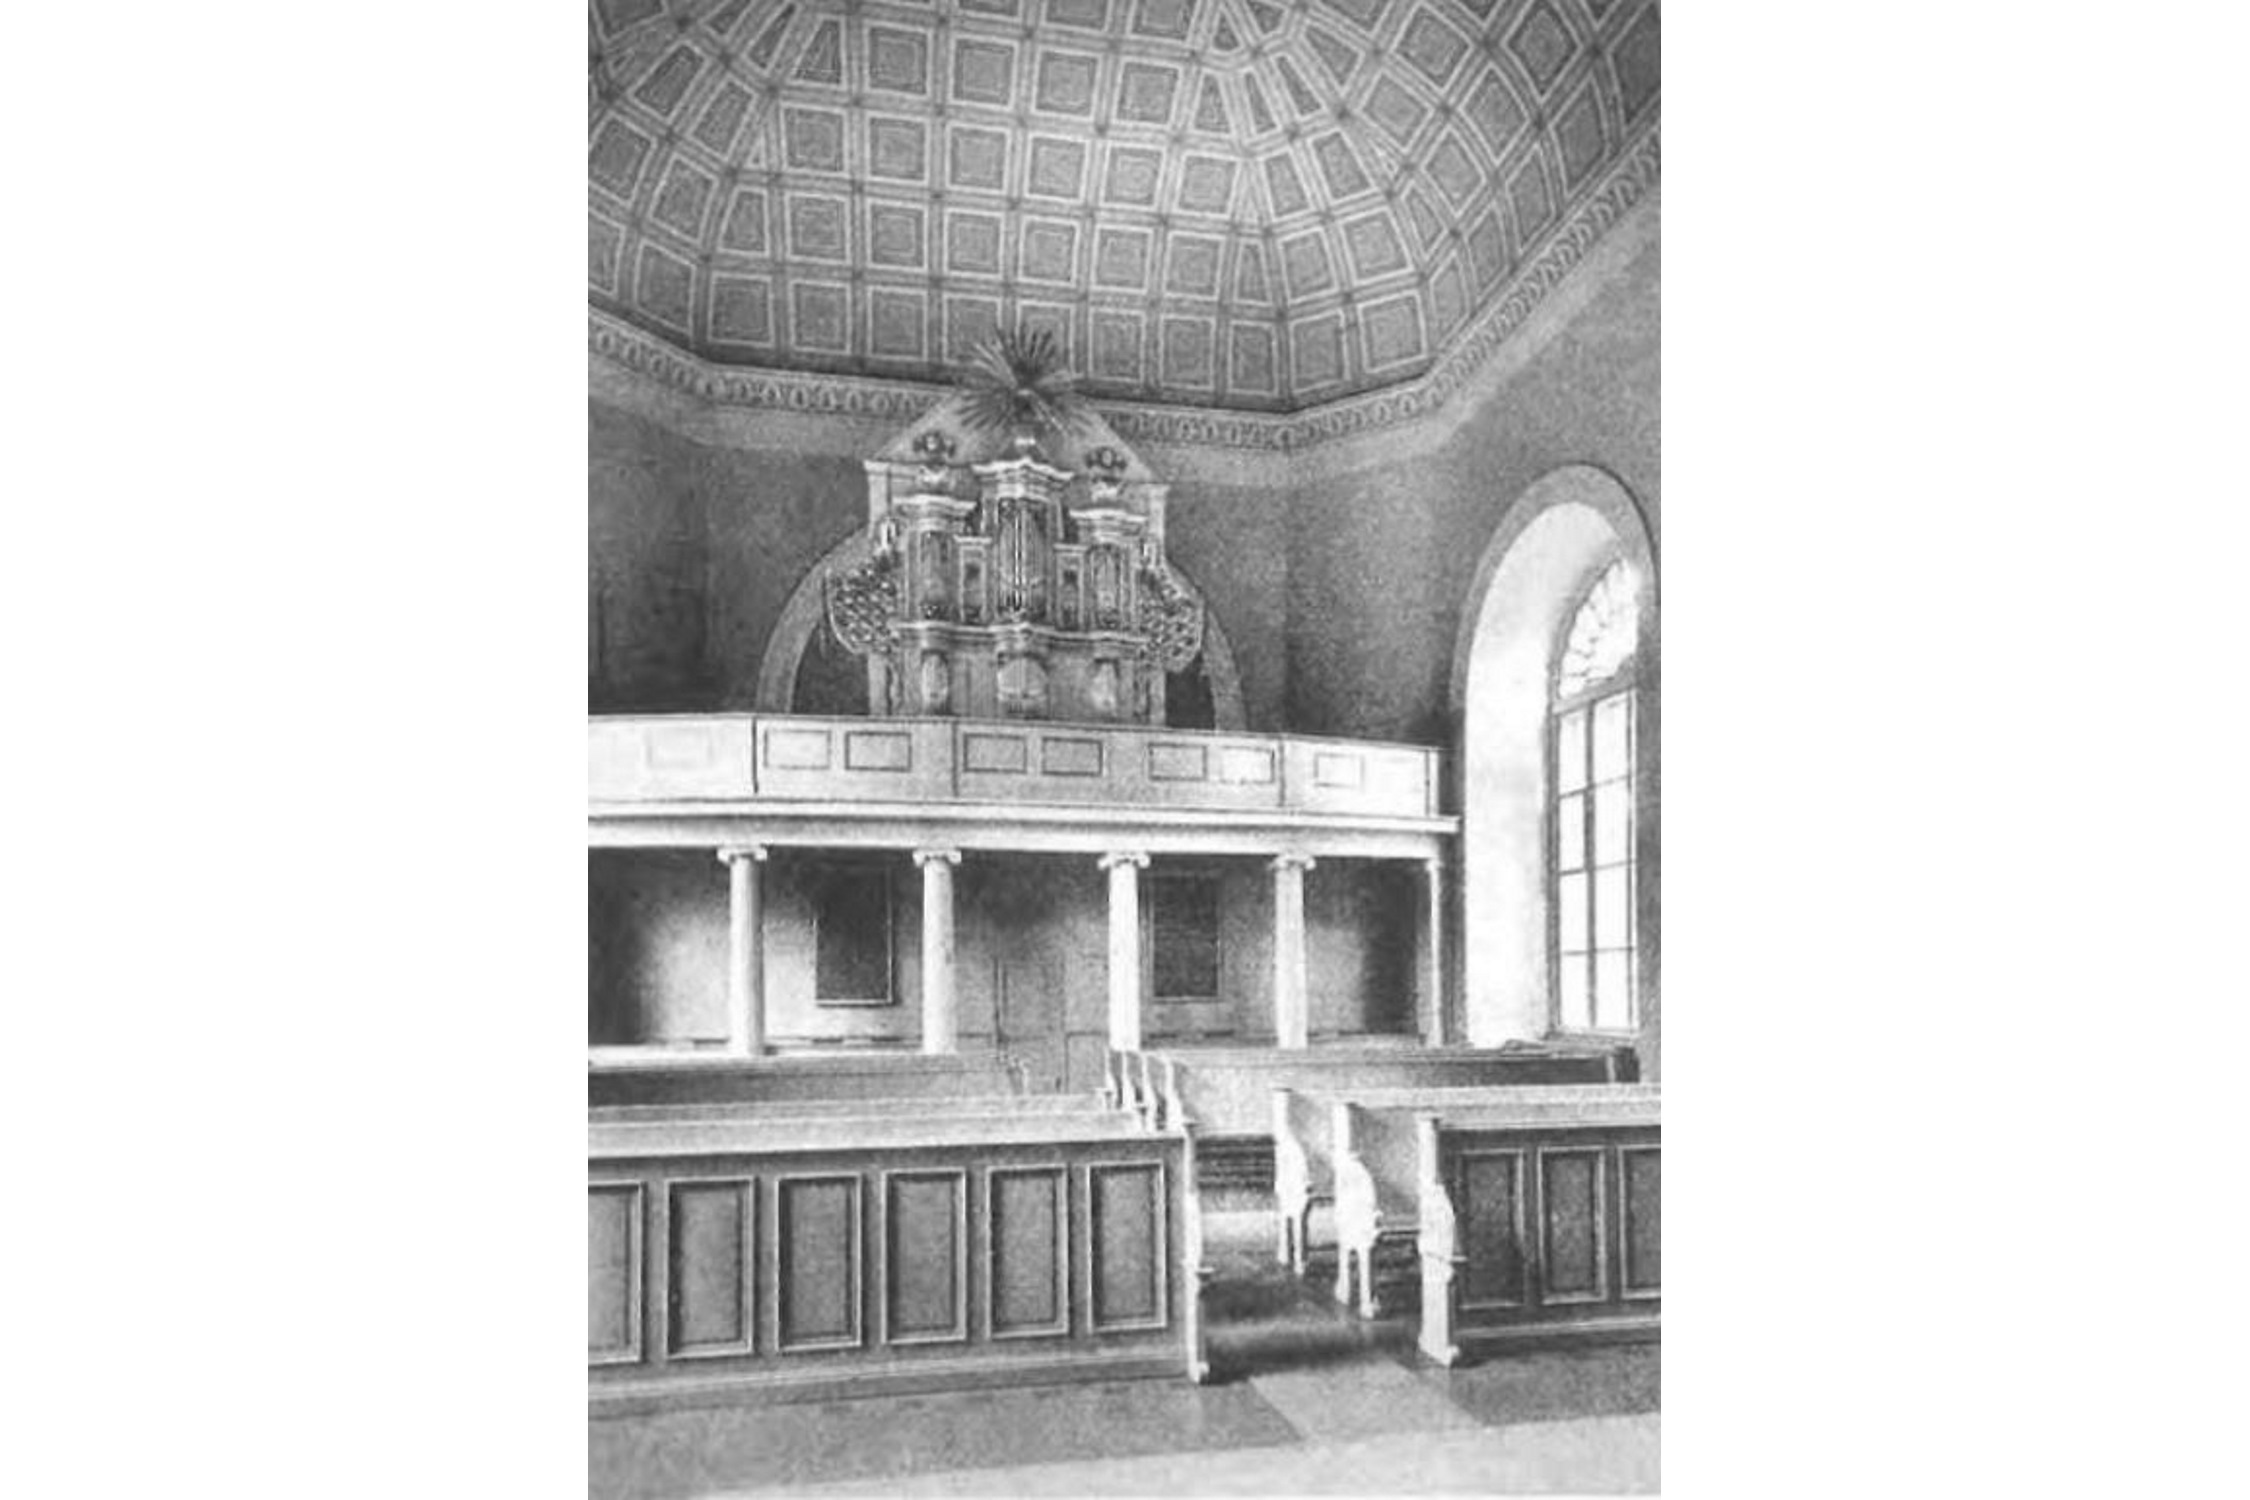 Innenansicht mit Orgel und Empore. Abb. Ghostwriter123, CC BY-SA 4.0, https://commons.wikimedia.org/w/index.php?curid=126617673